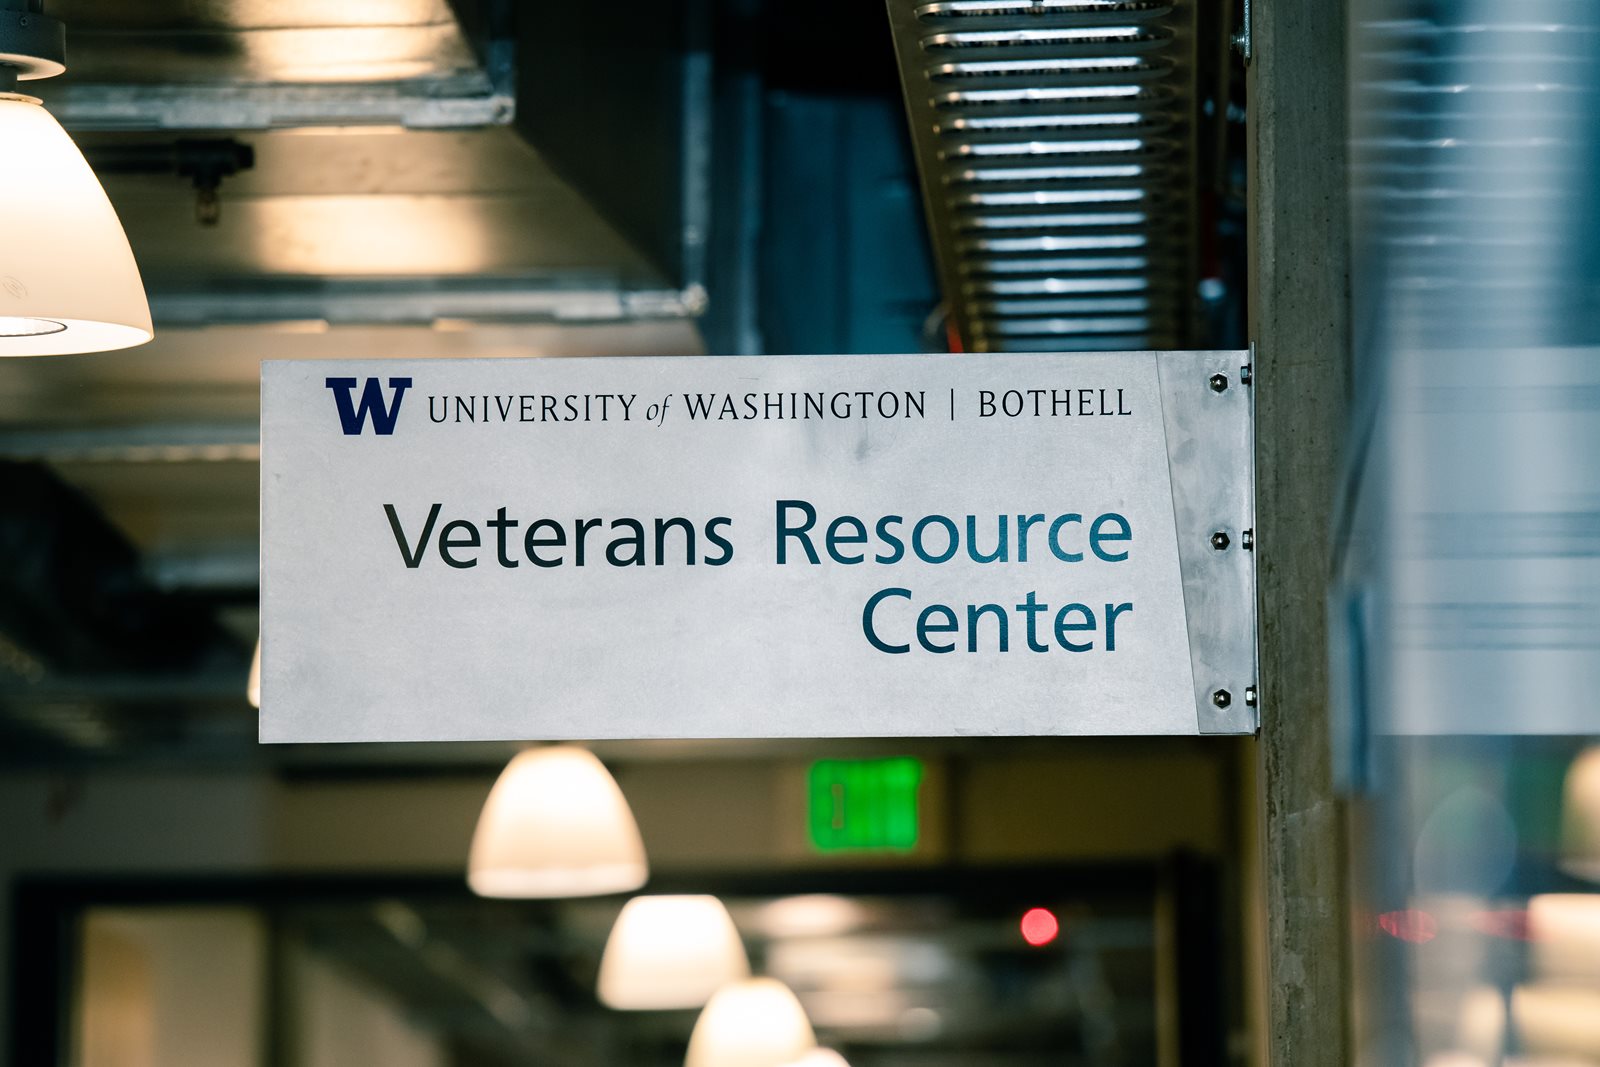 Veterans Resource Center sign